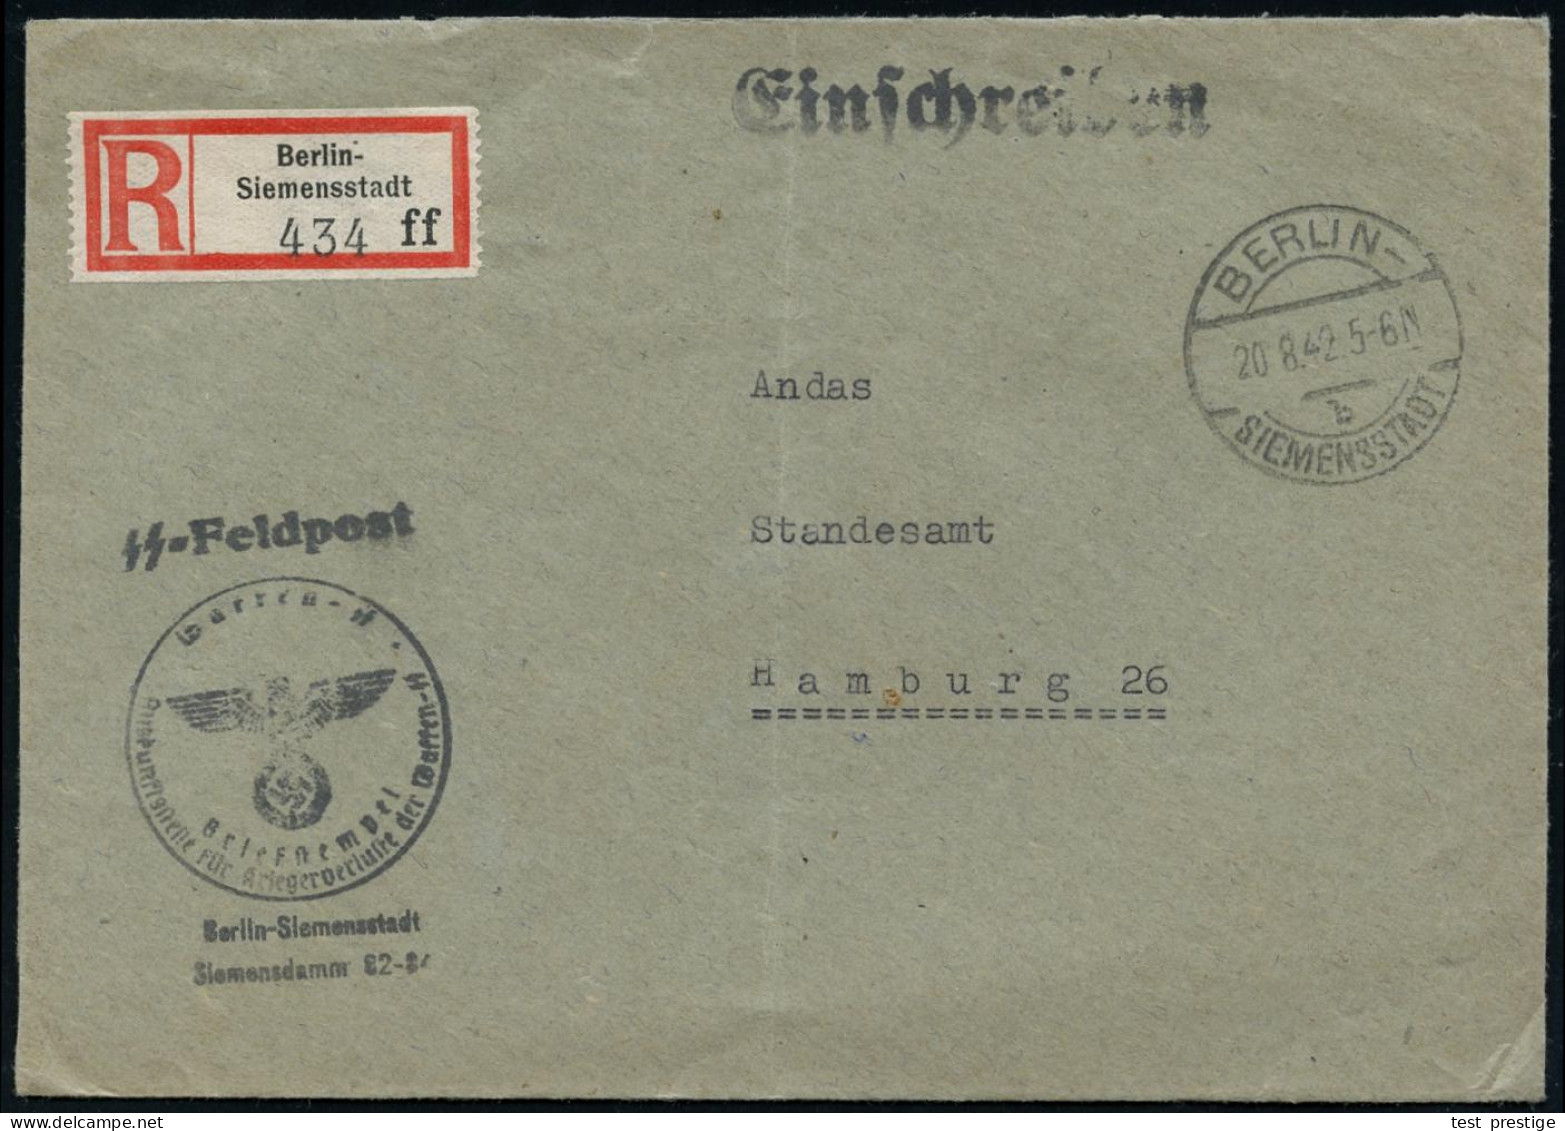 BERLIN-/ B/ SIEMENSSTADT 1942 (20.8.) 1K-Brücke + Selbstbucher-RZ: Berlin-/Siemesstadt/ F F + Hdn: S S - Feldpost/ Waffe - Guerre Mondiale (Seconde)